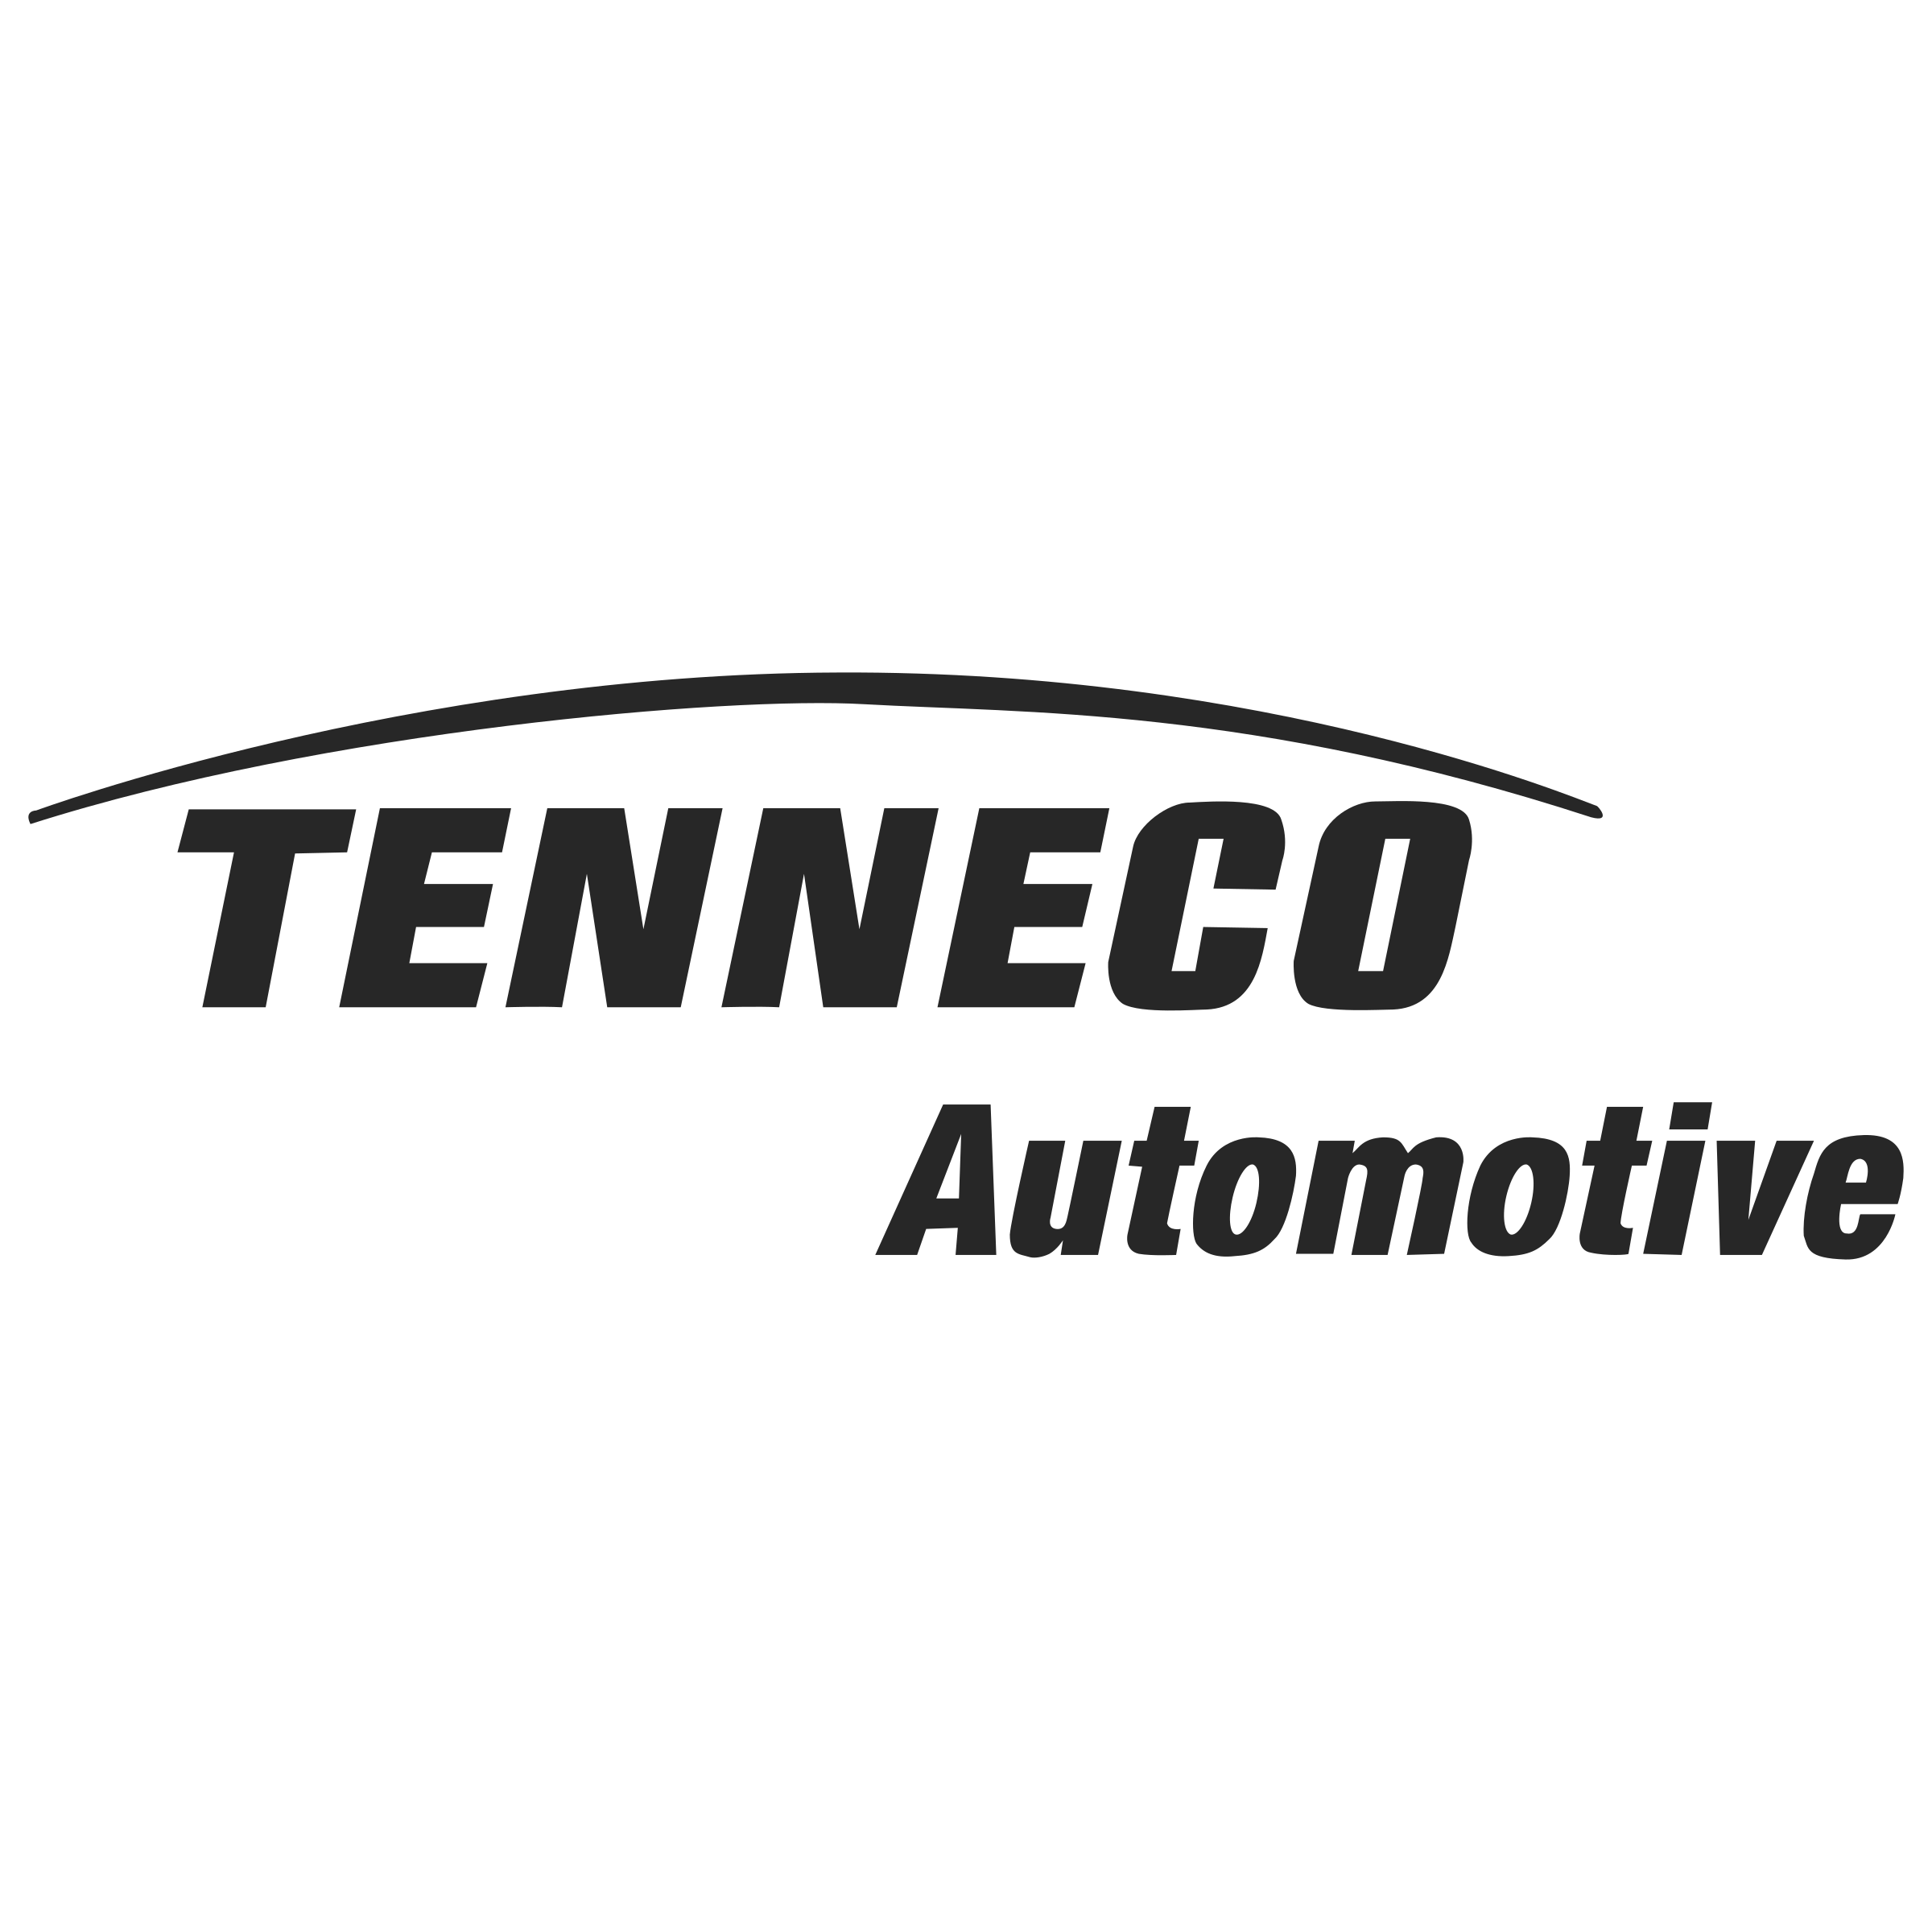 Tenneco Logo - Tenneco Automotive Logo PNG Transparent & SVG Vector